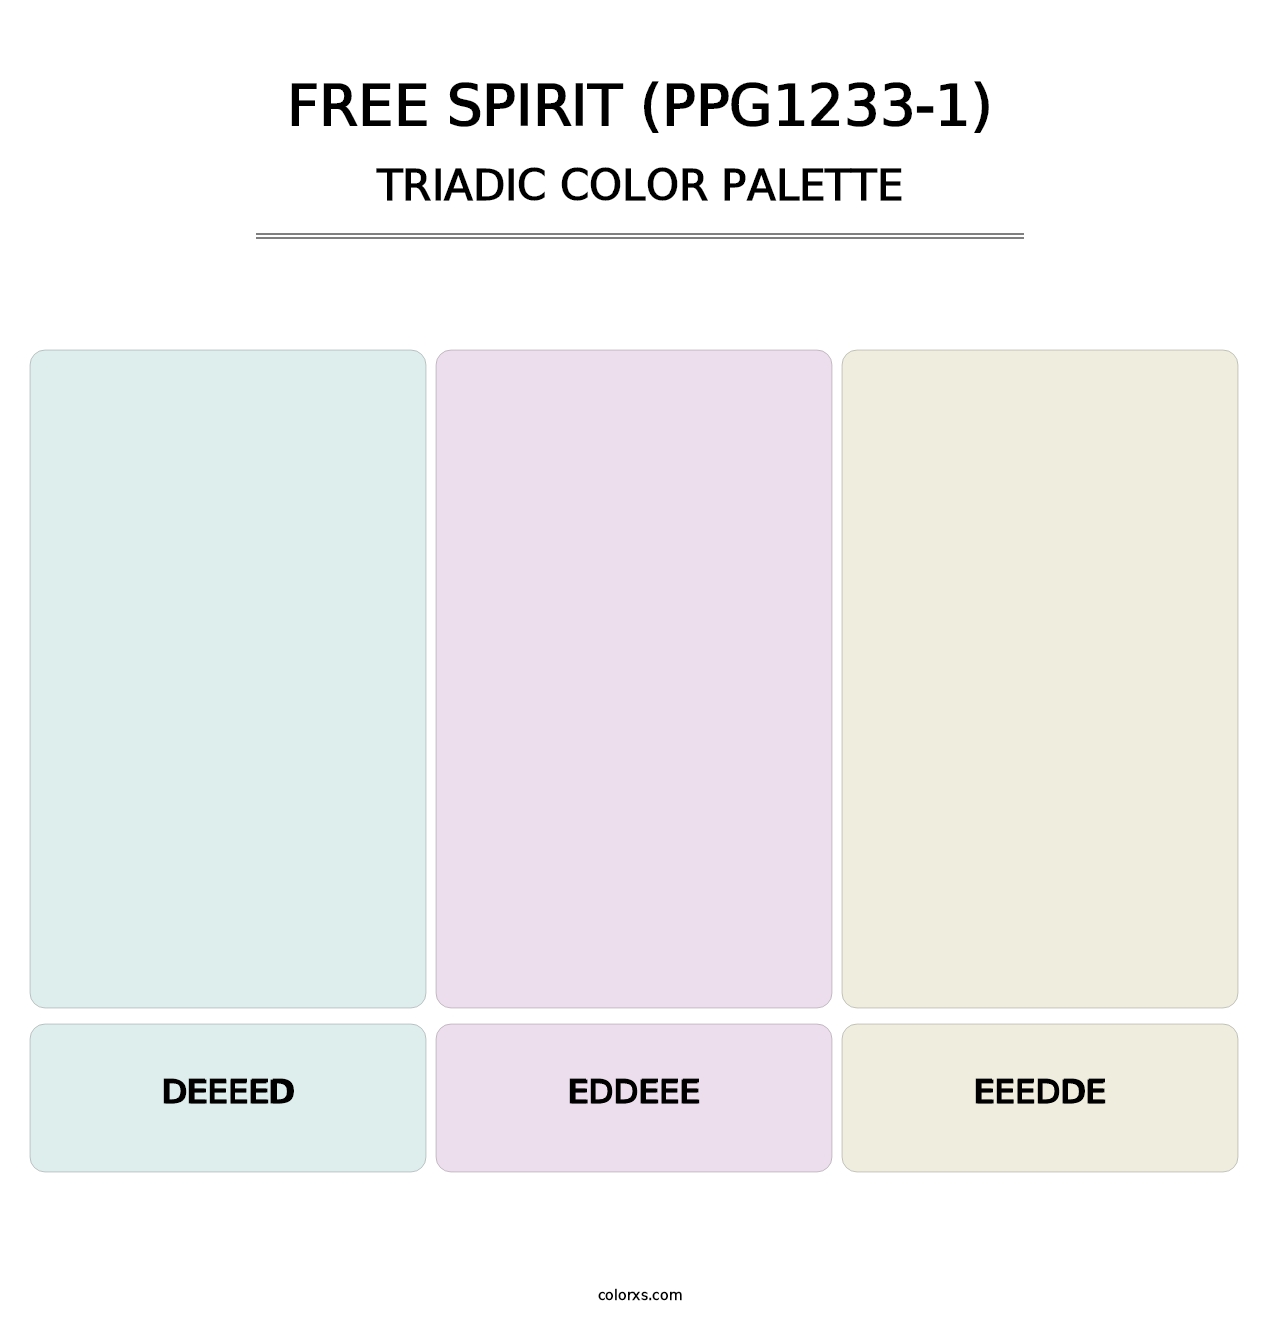 Free Spirit (PPG1233-1) - Triadic Color Palette